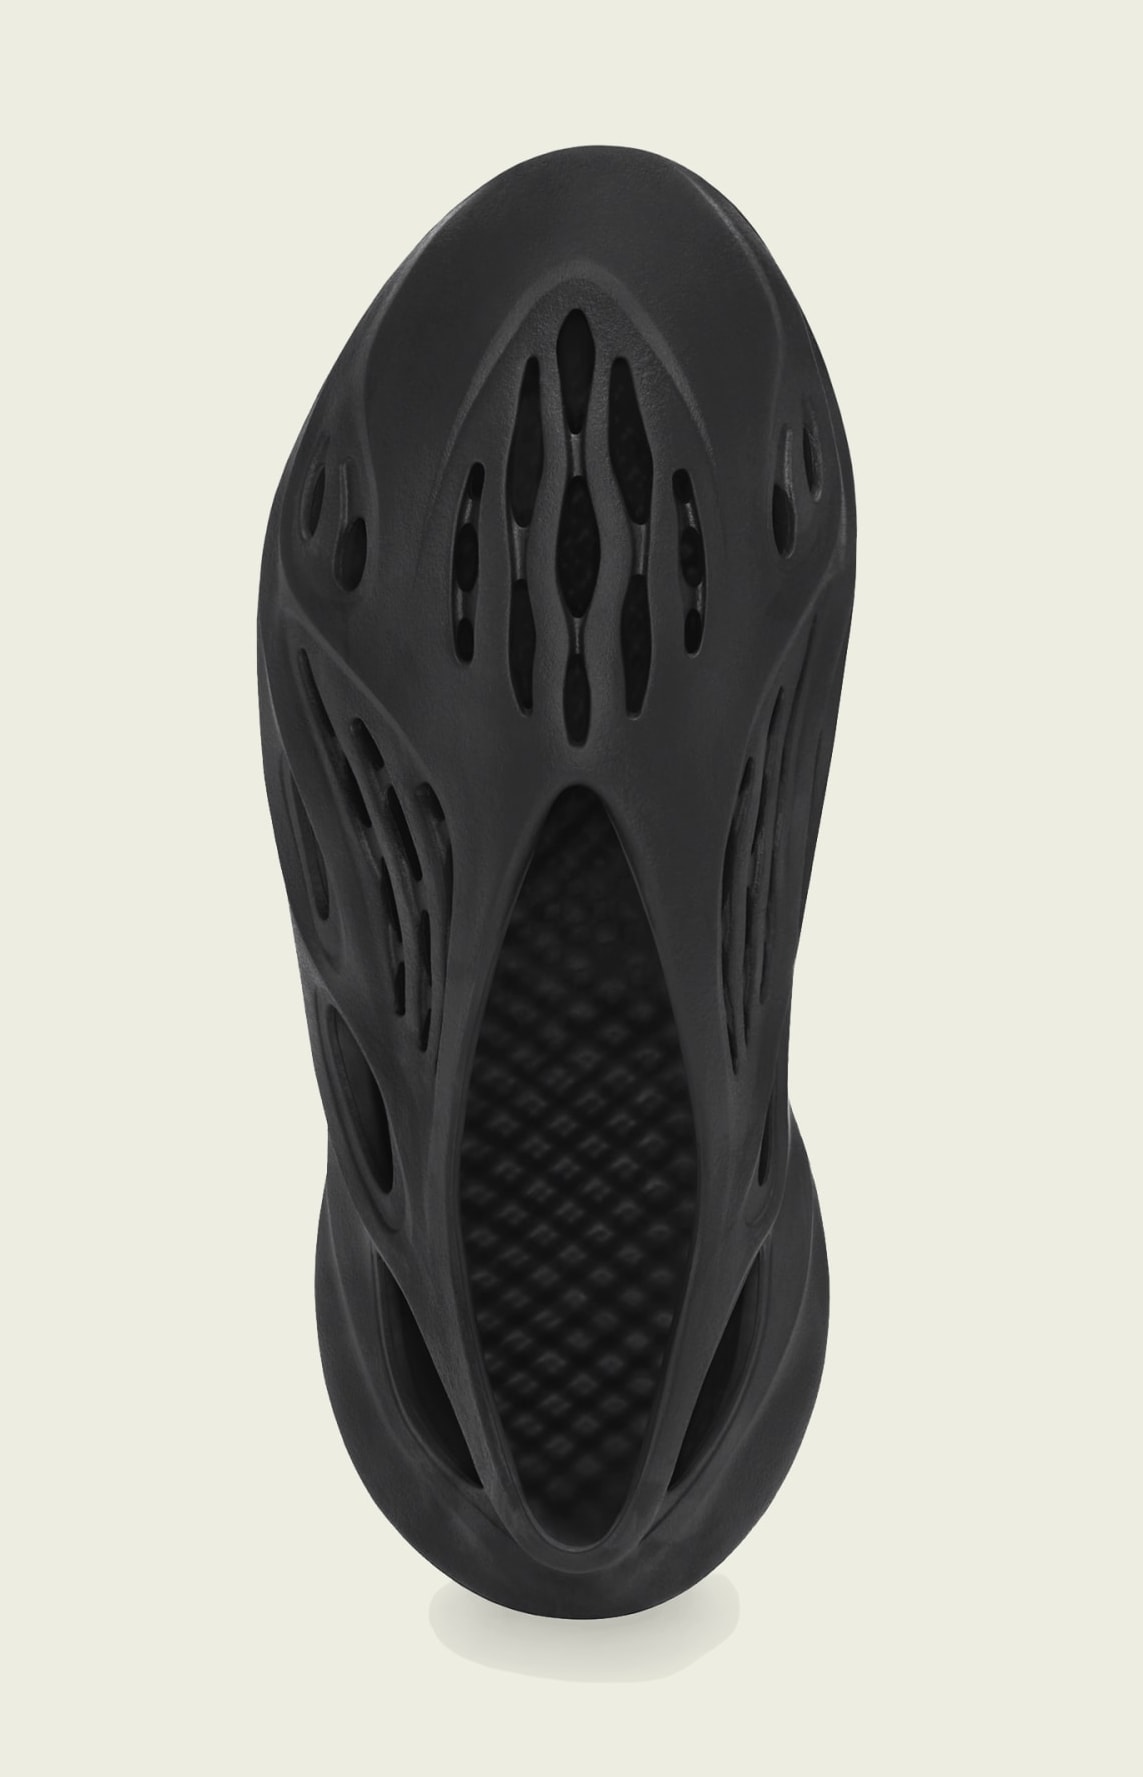 Adidas Yeezy Foam Runner 'Onyx' HP8739 Top